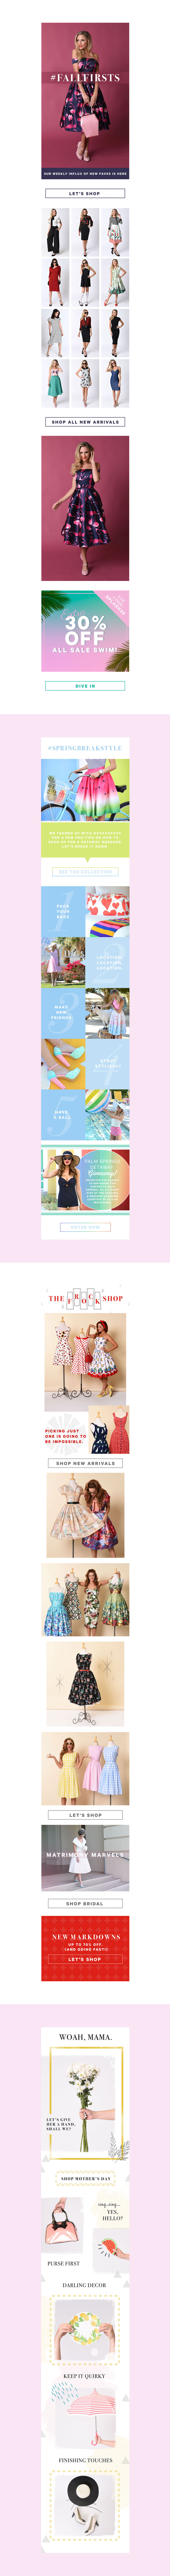 Web Design  Email graphic design  art direction  digital design Fashion  Retail marketing   digital marketing design